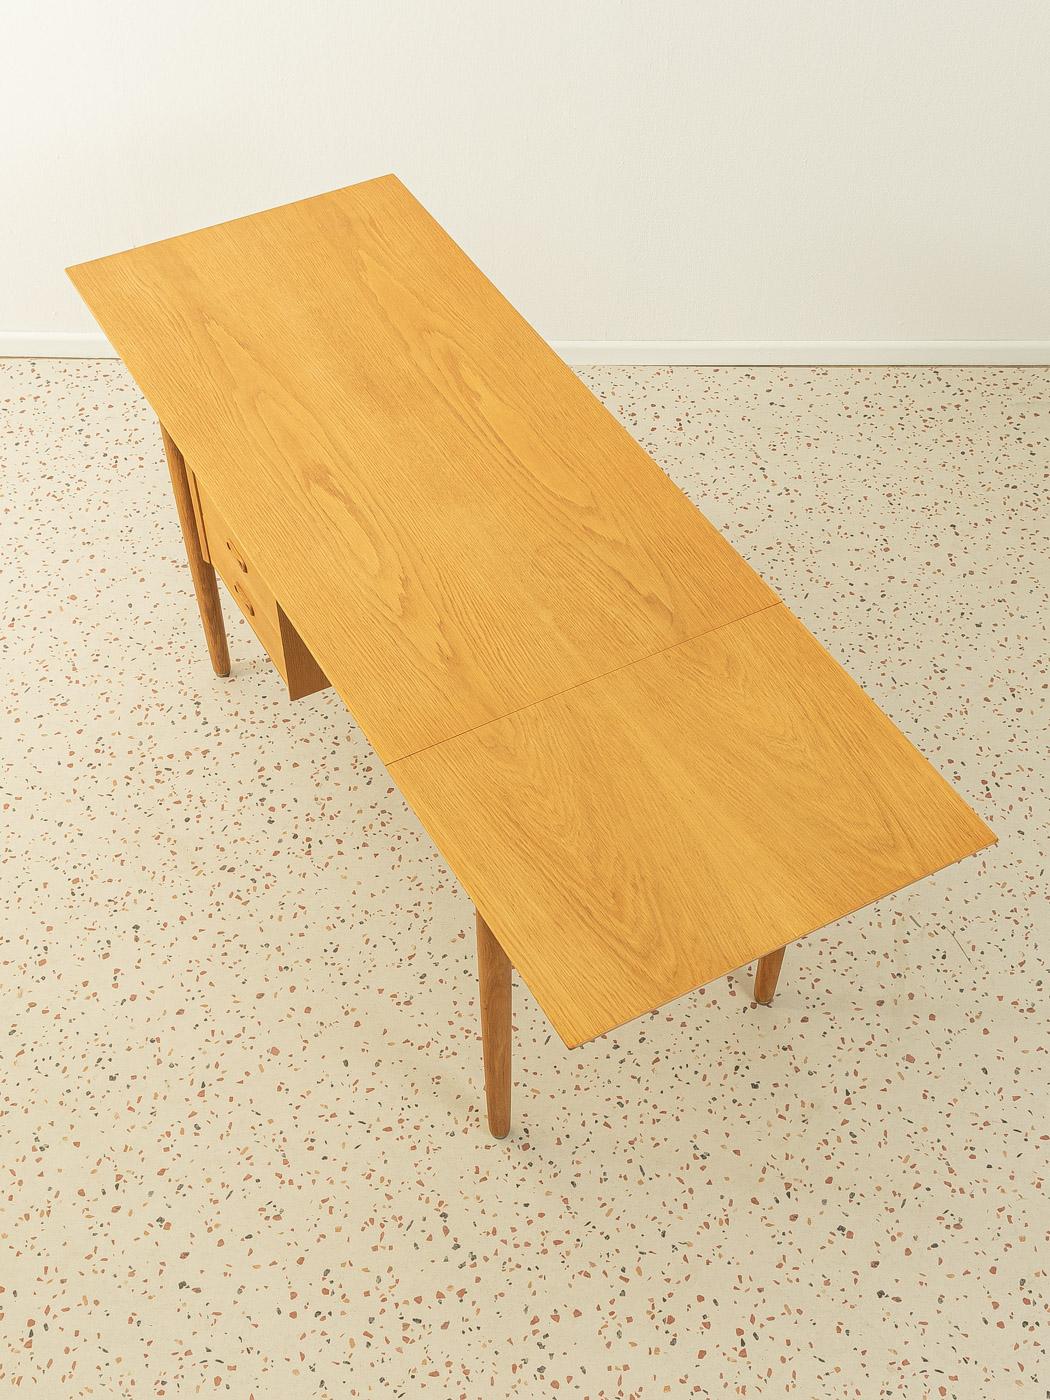 Freestanding Desk from the 1960s by Arne Vodder for H. Sigh, Made in Denmark 1